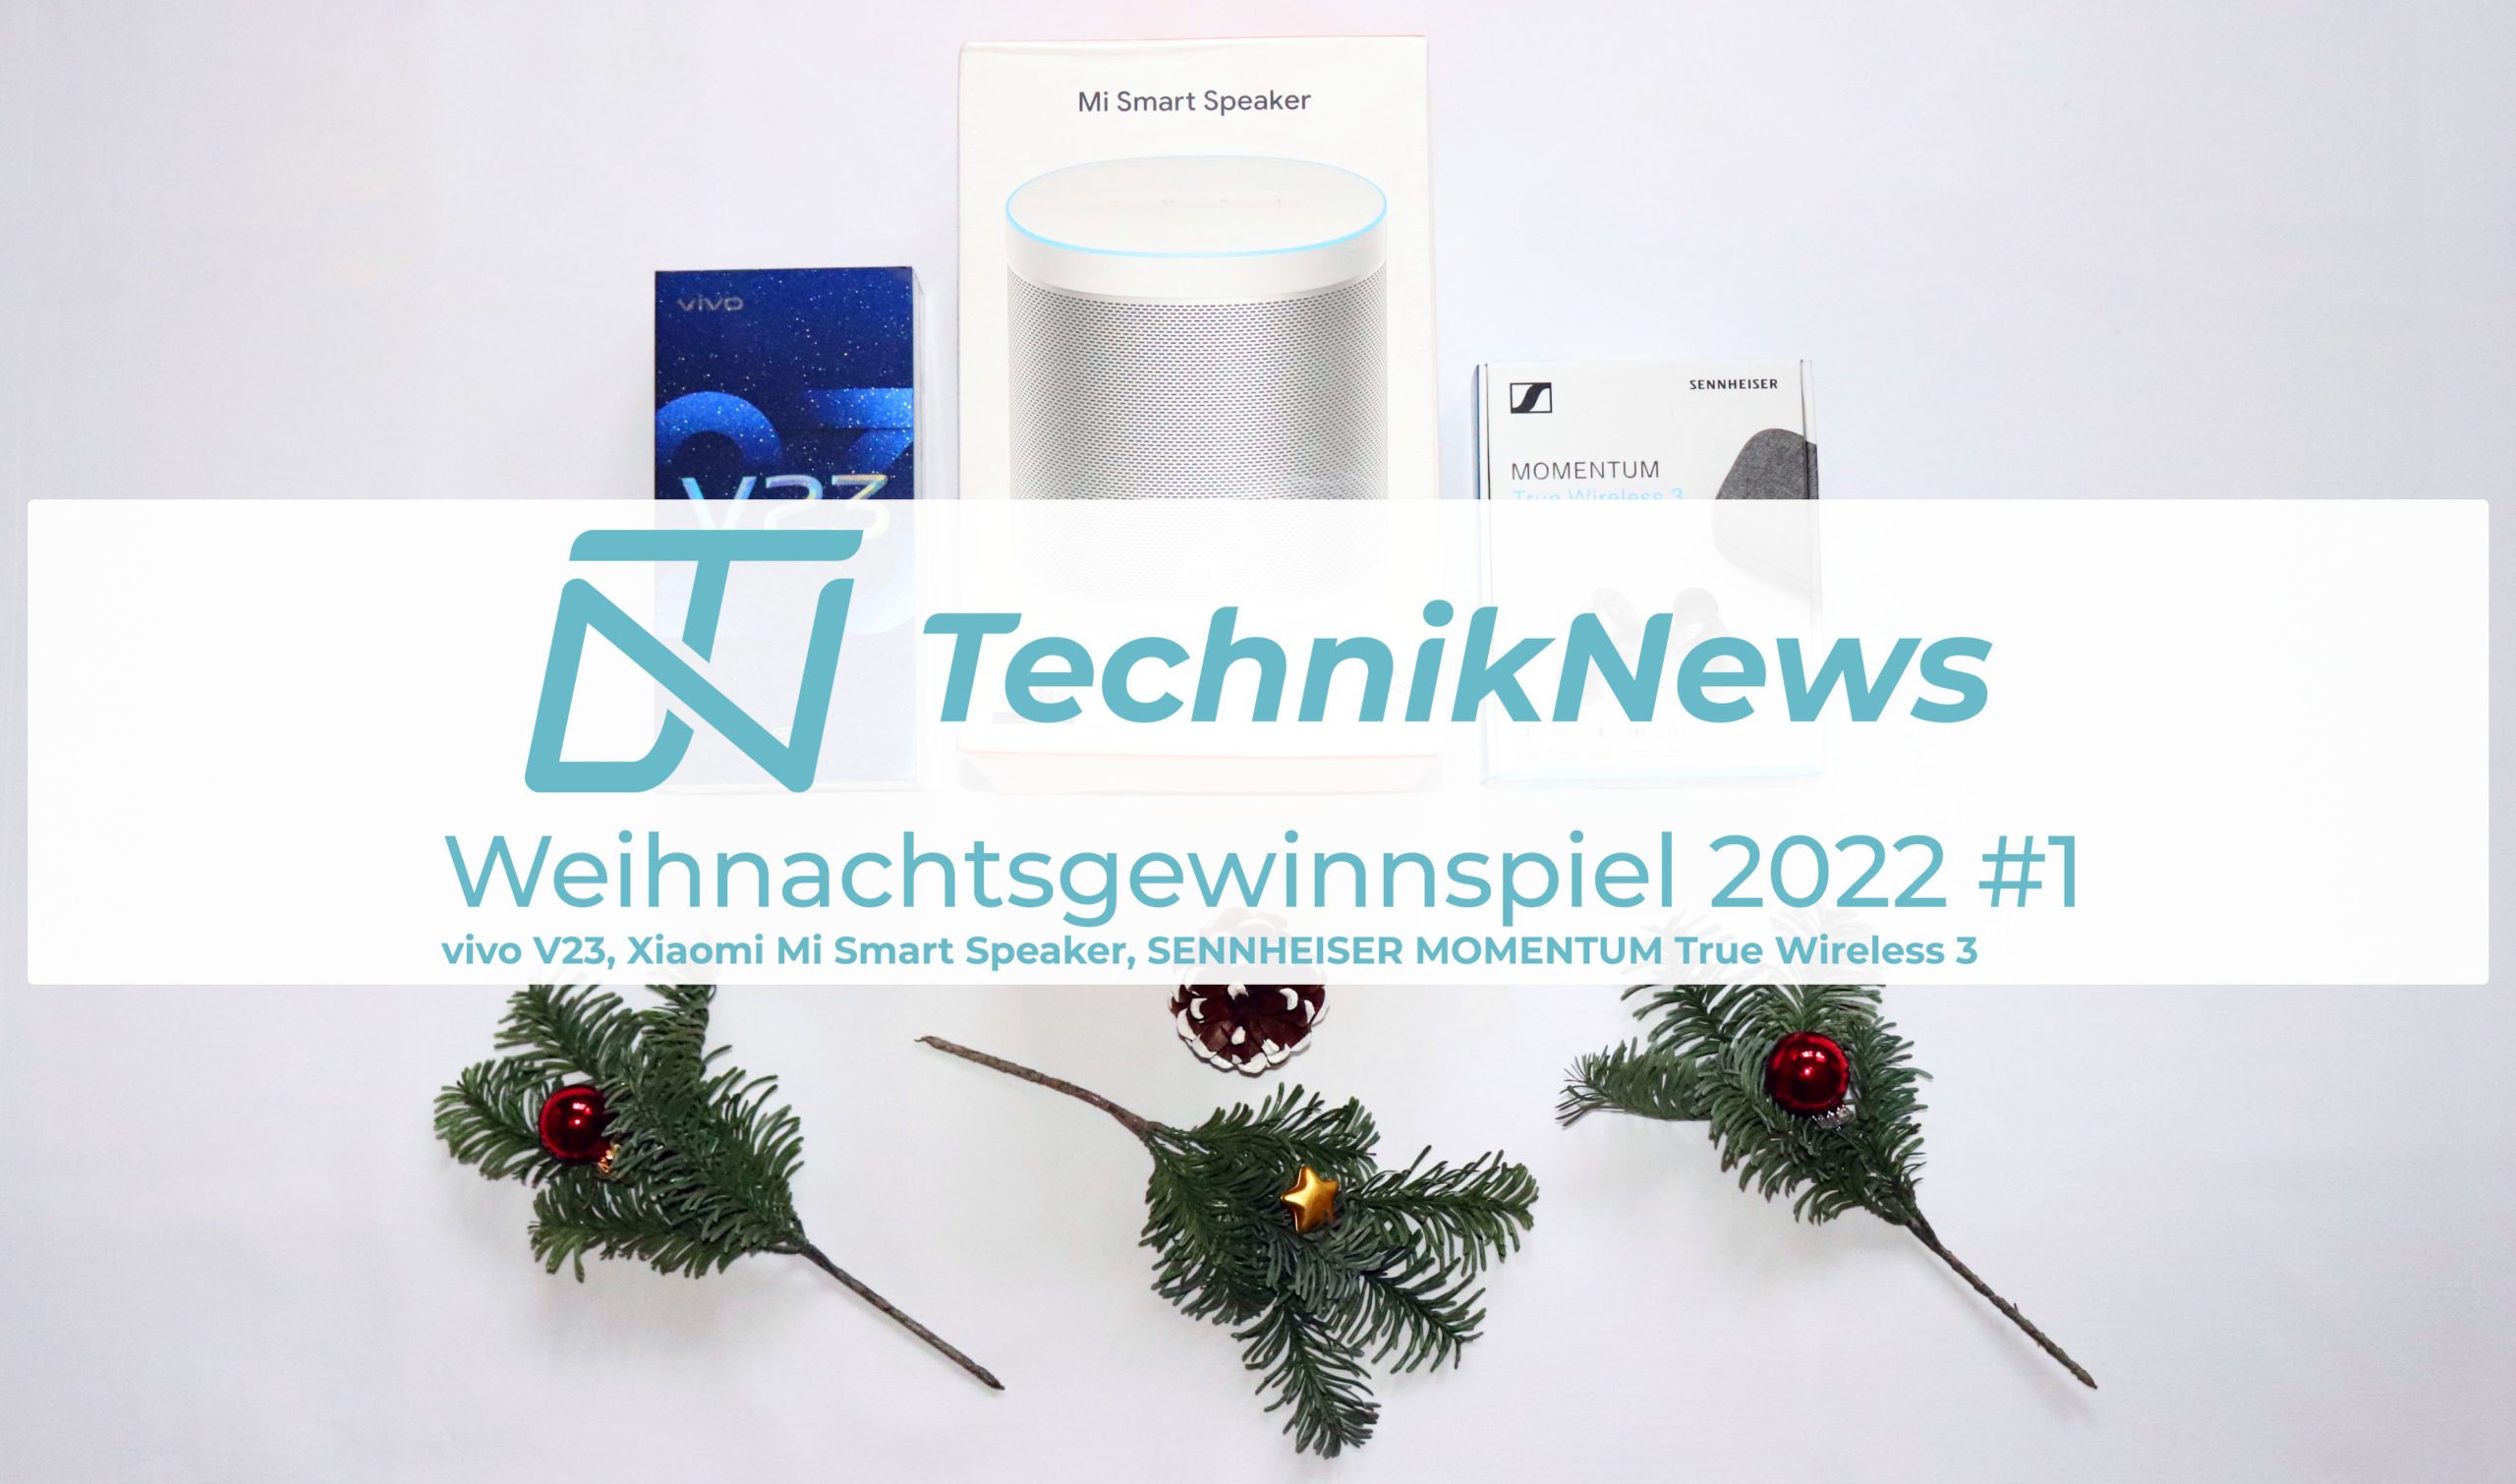 TechnikNews Christmas competition 2022 #1